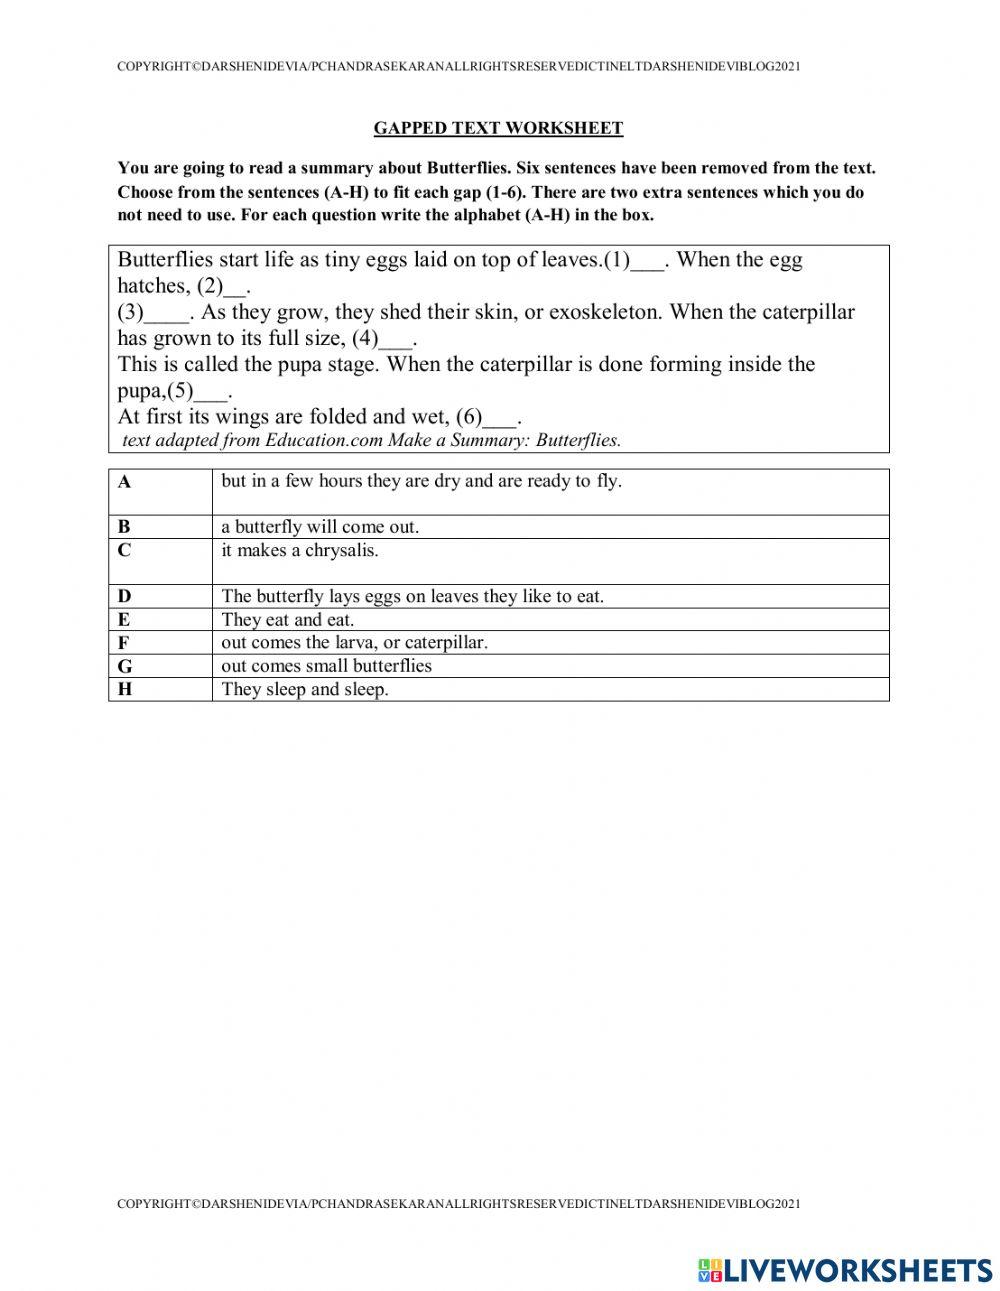 Gapped text PT3 more worksheets